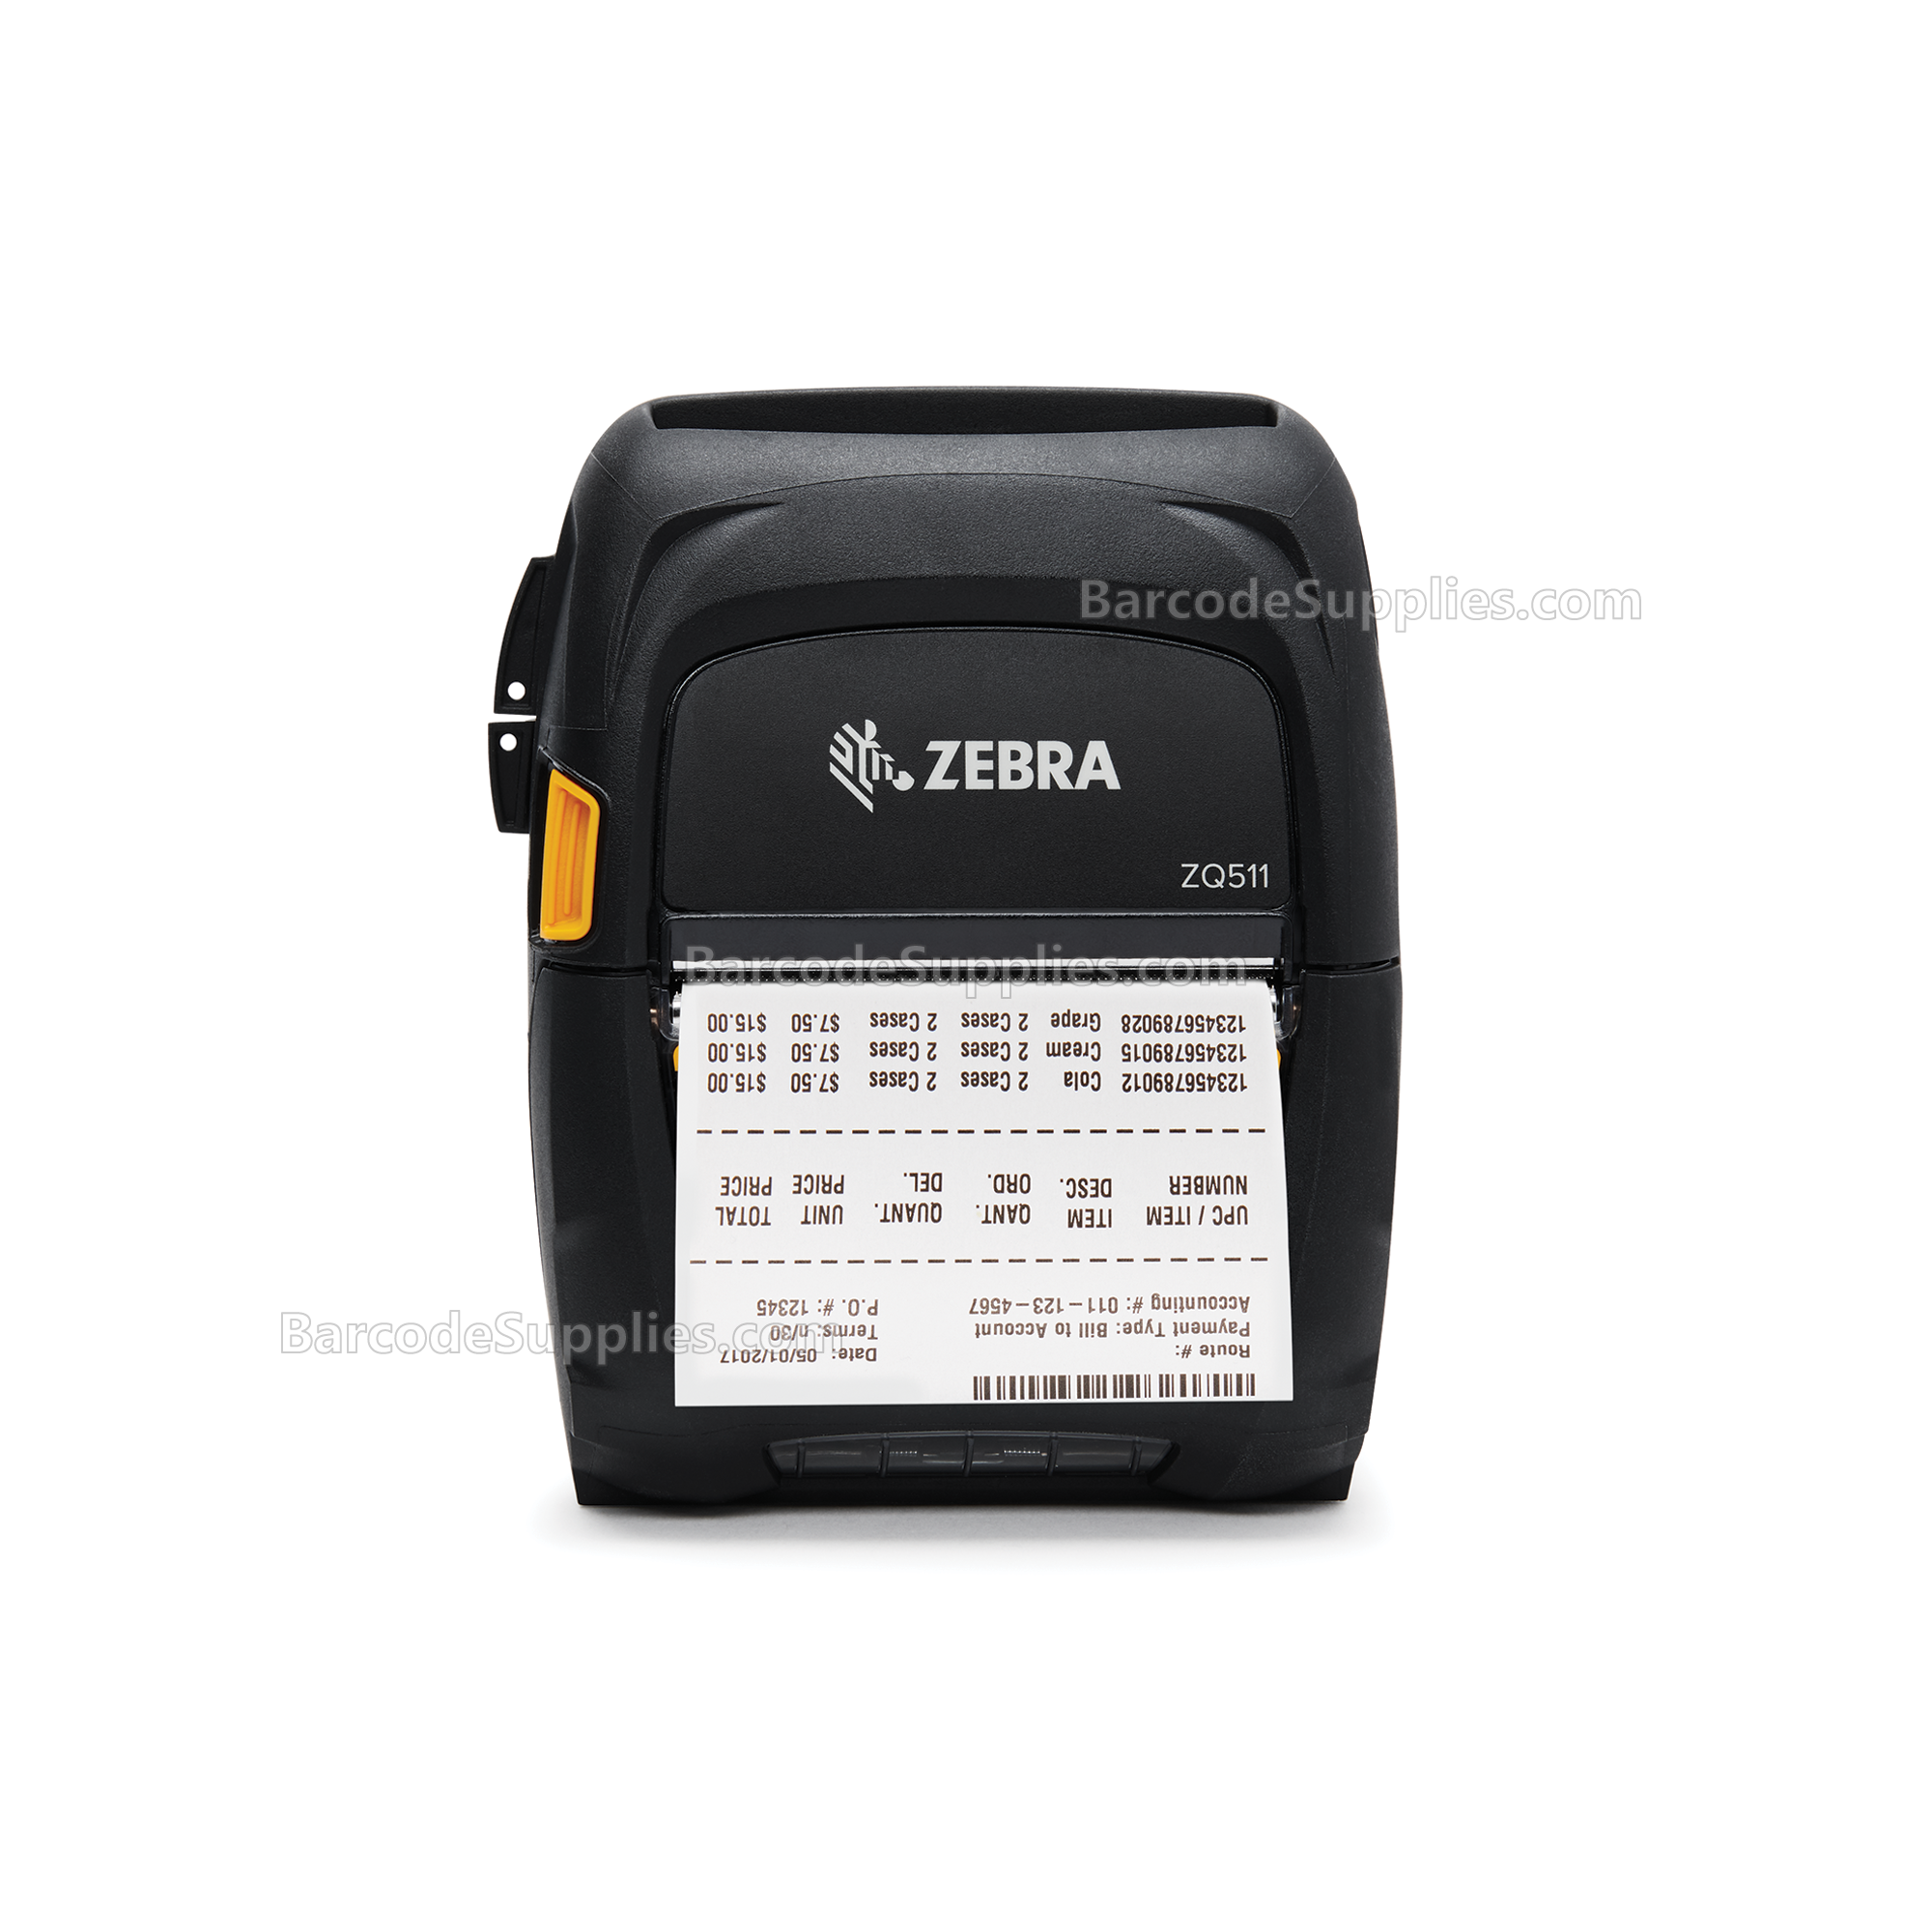 Zebra ZQ511 Mobile Printer - media width 3.15/80mm; English/Latin fonts, 802.11ac/Bluetooth 4.1, stnd battery, US/Canada certs - MPN: ZQ51-BUW0000-00